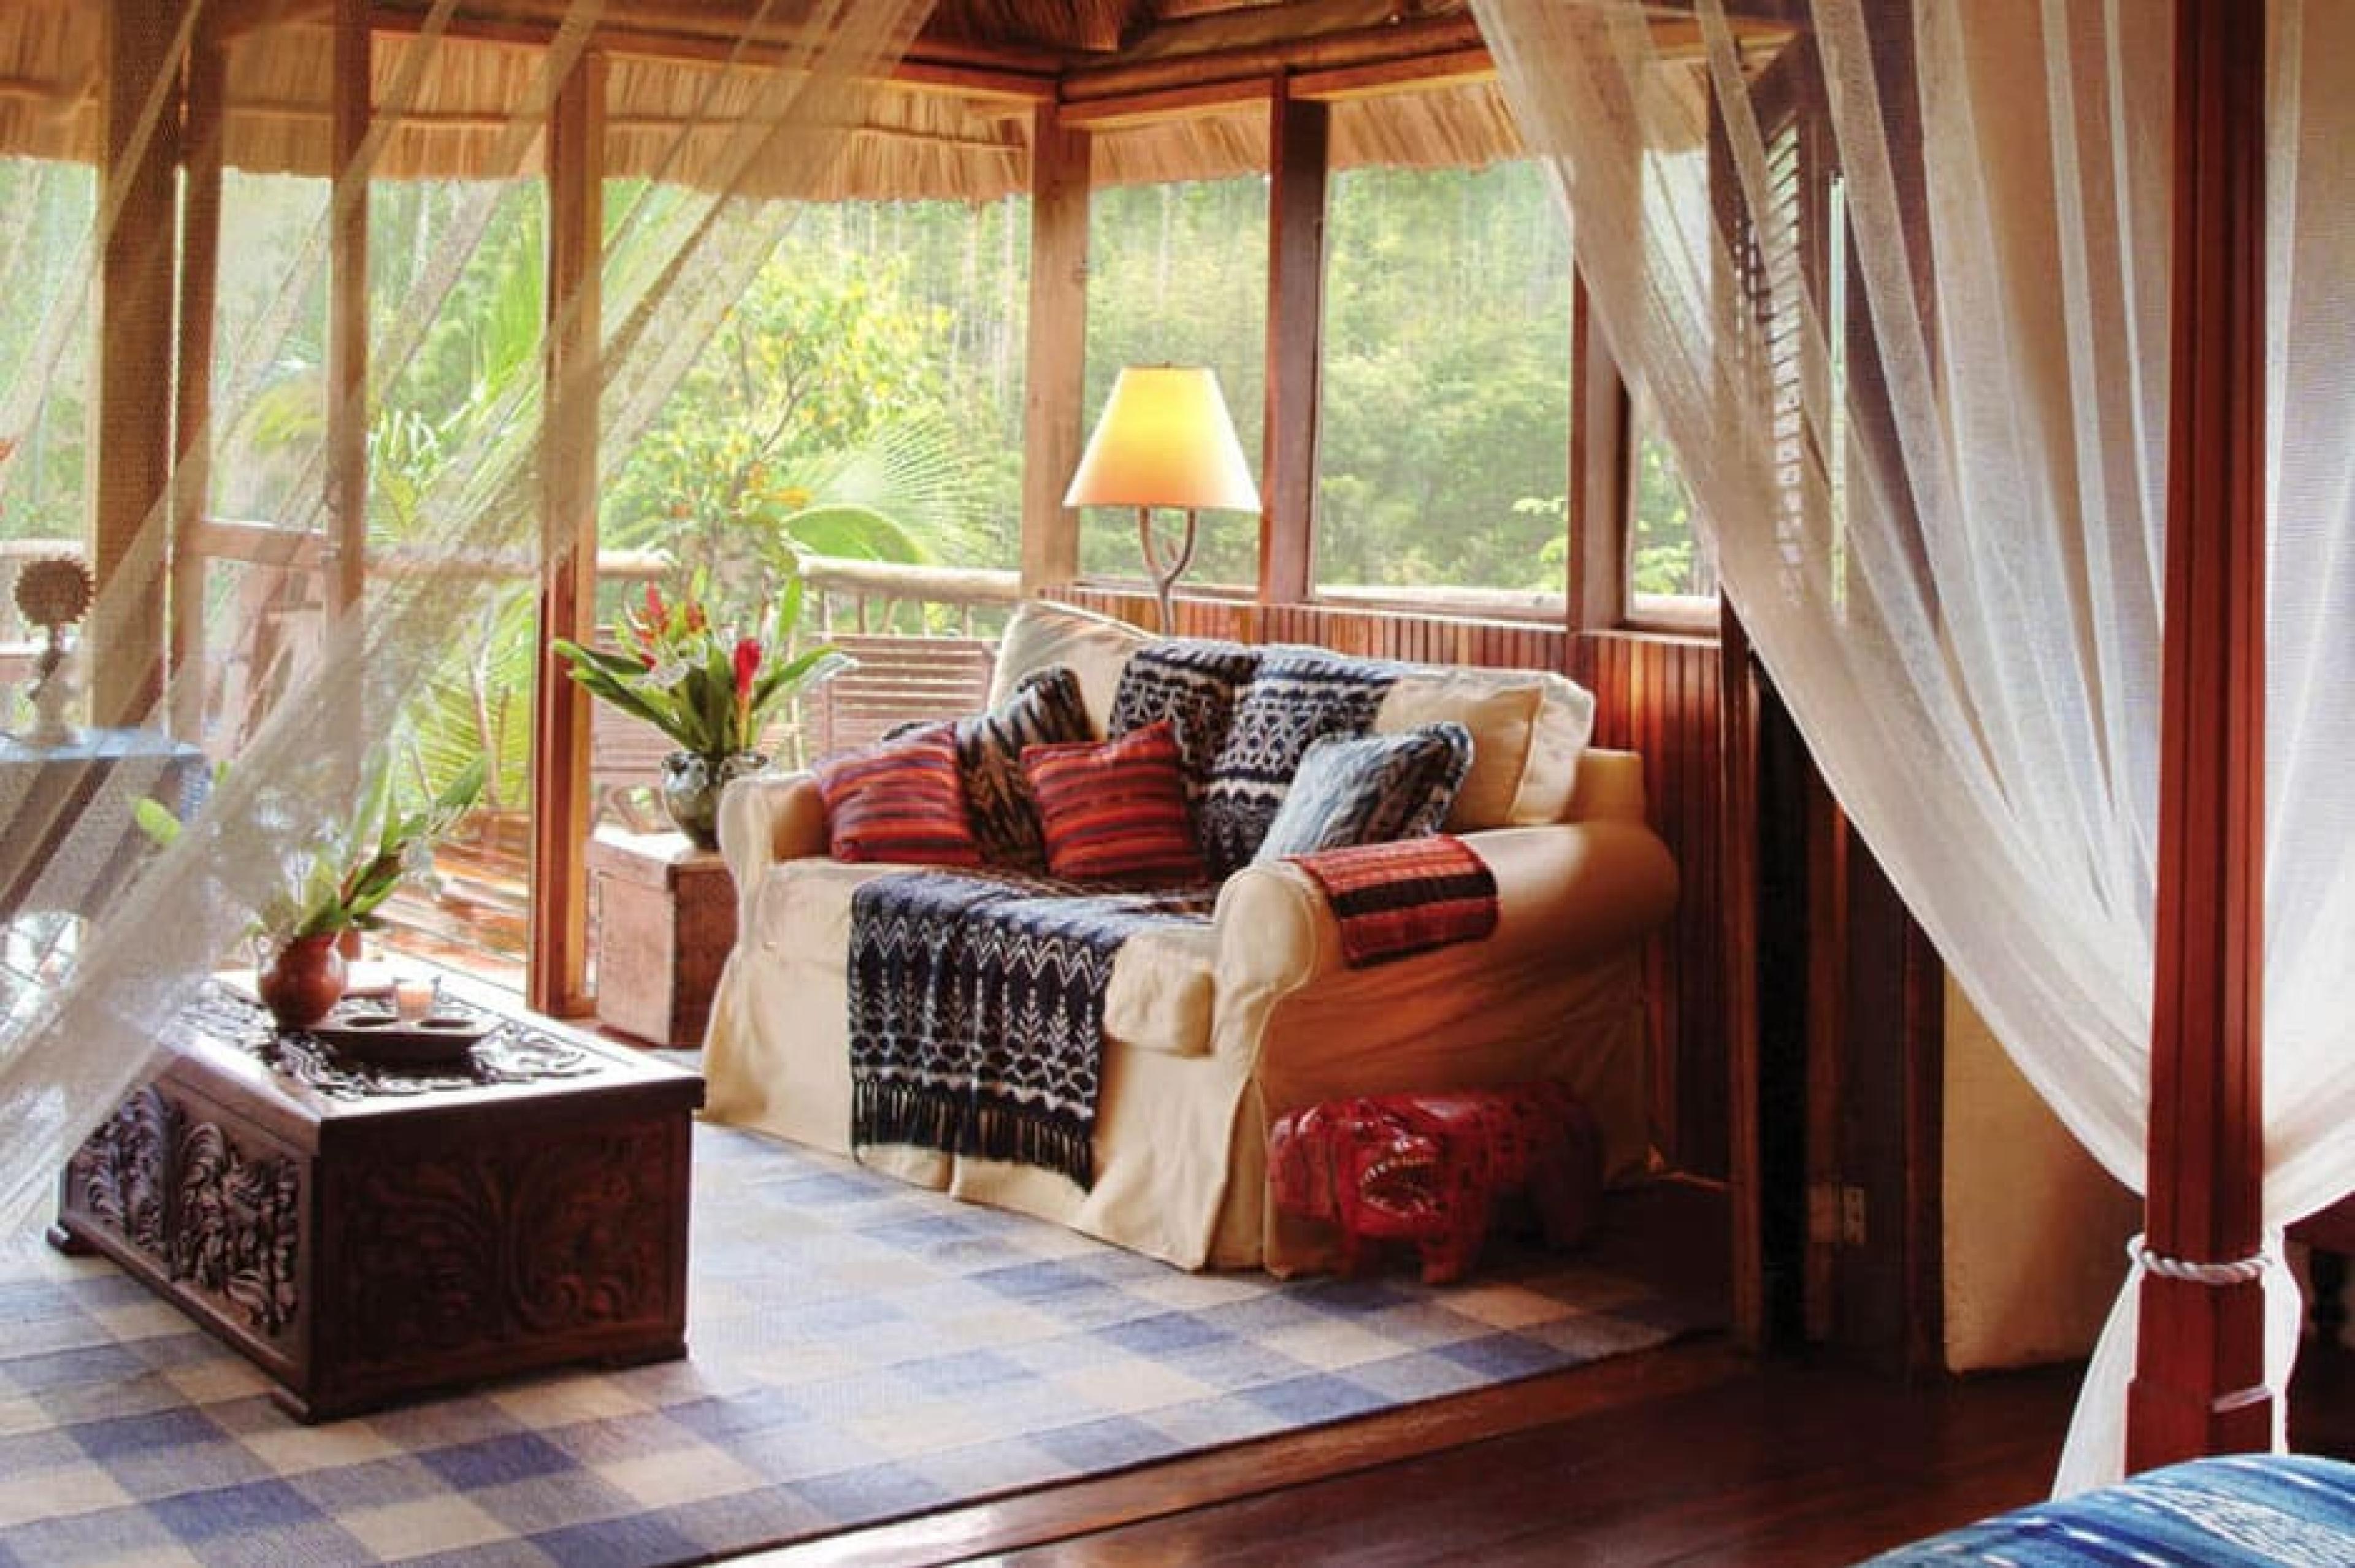 Room lounge at Blancaneaux Lodge, Belize